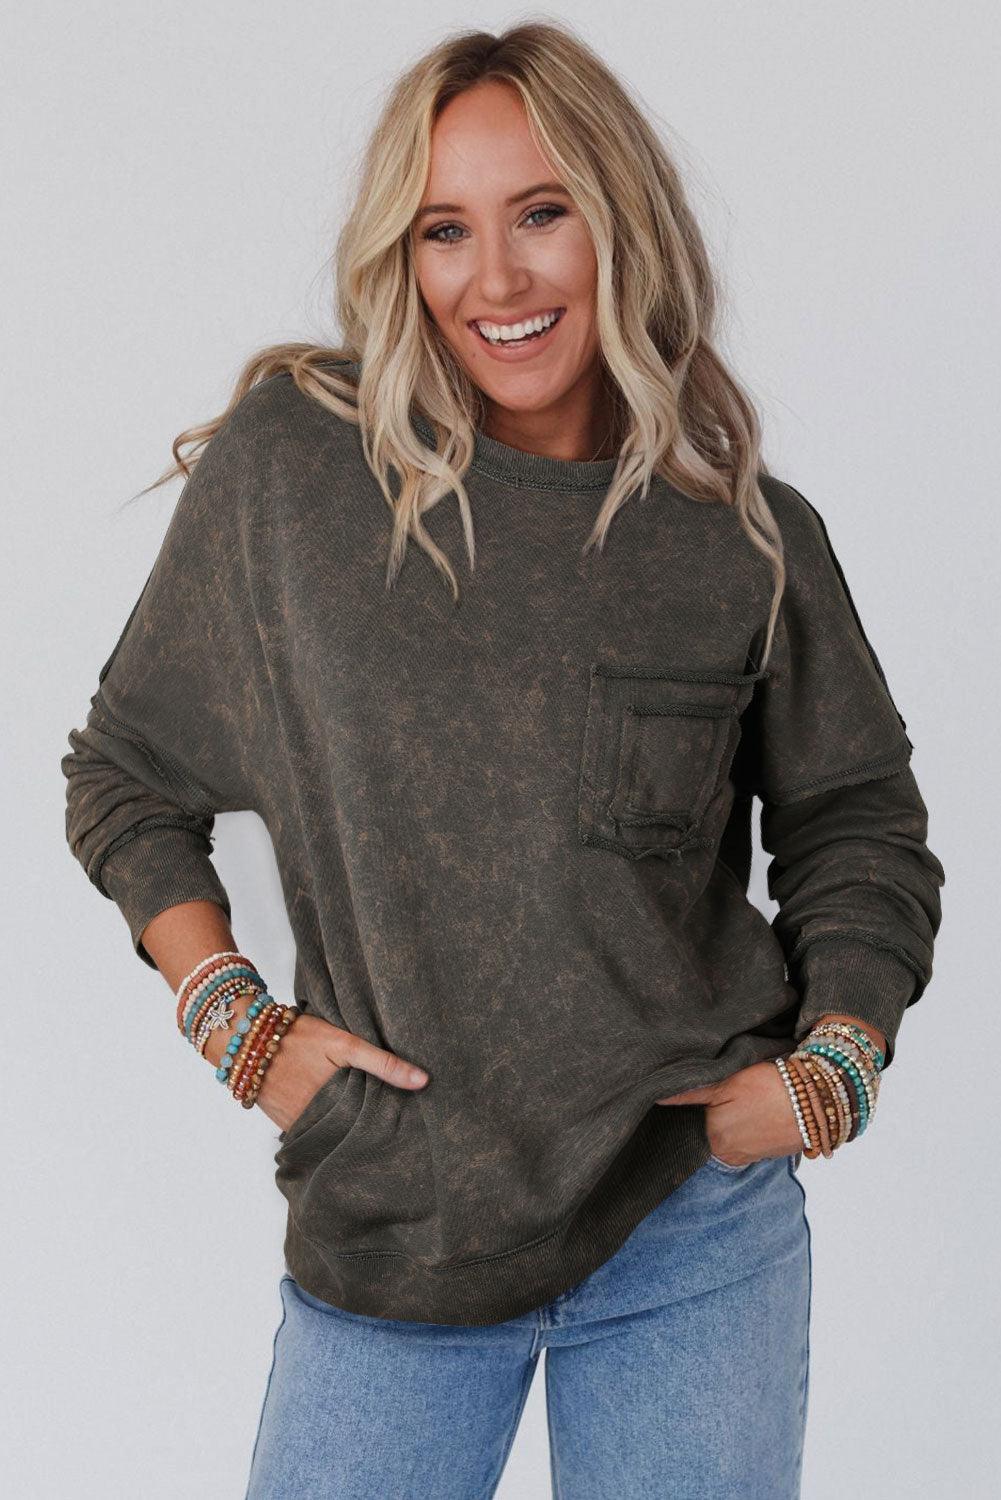 Gray Acid Wash Drop Shoulder Long Sleeve Sweatshirt with Pockets - L & M Kee, LLC